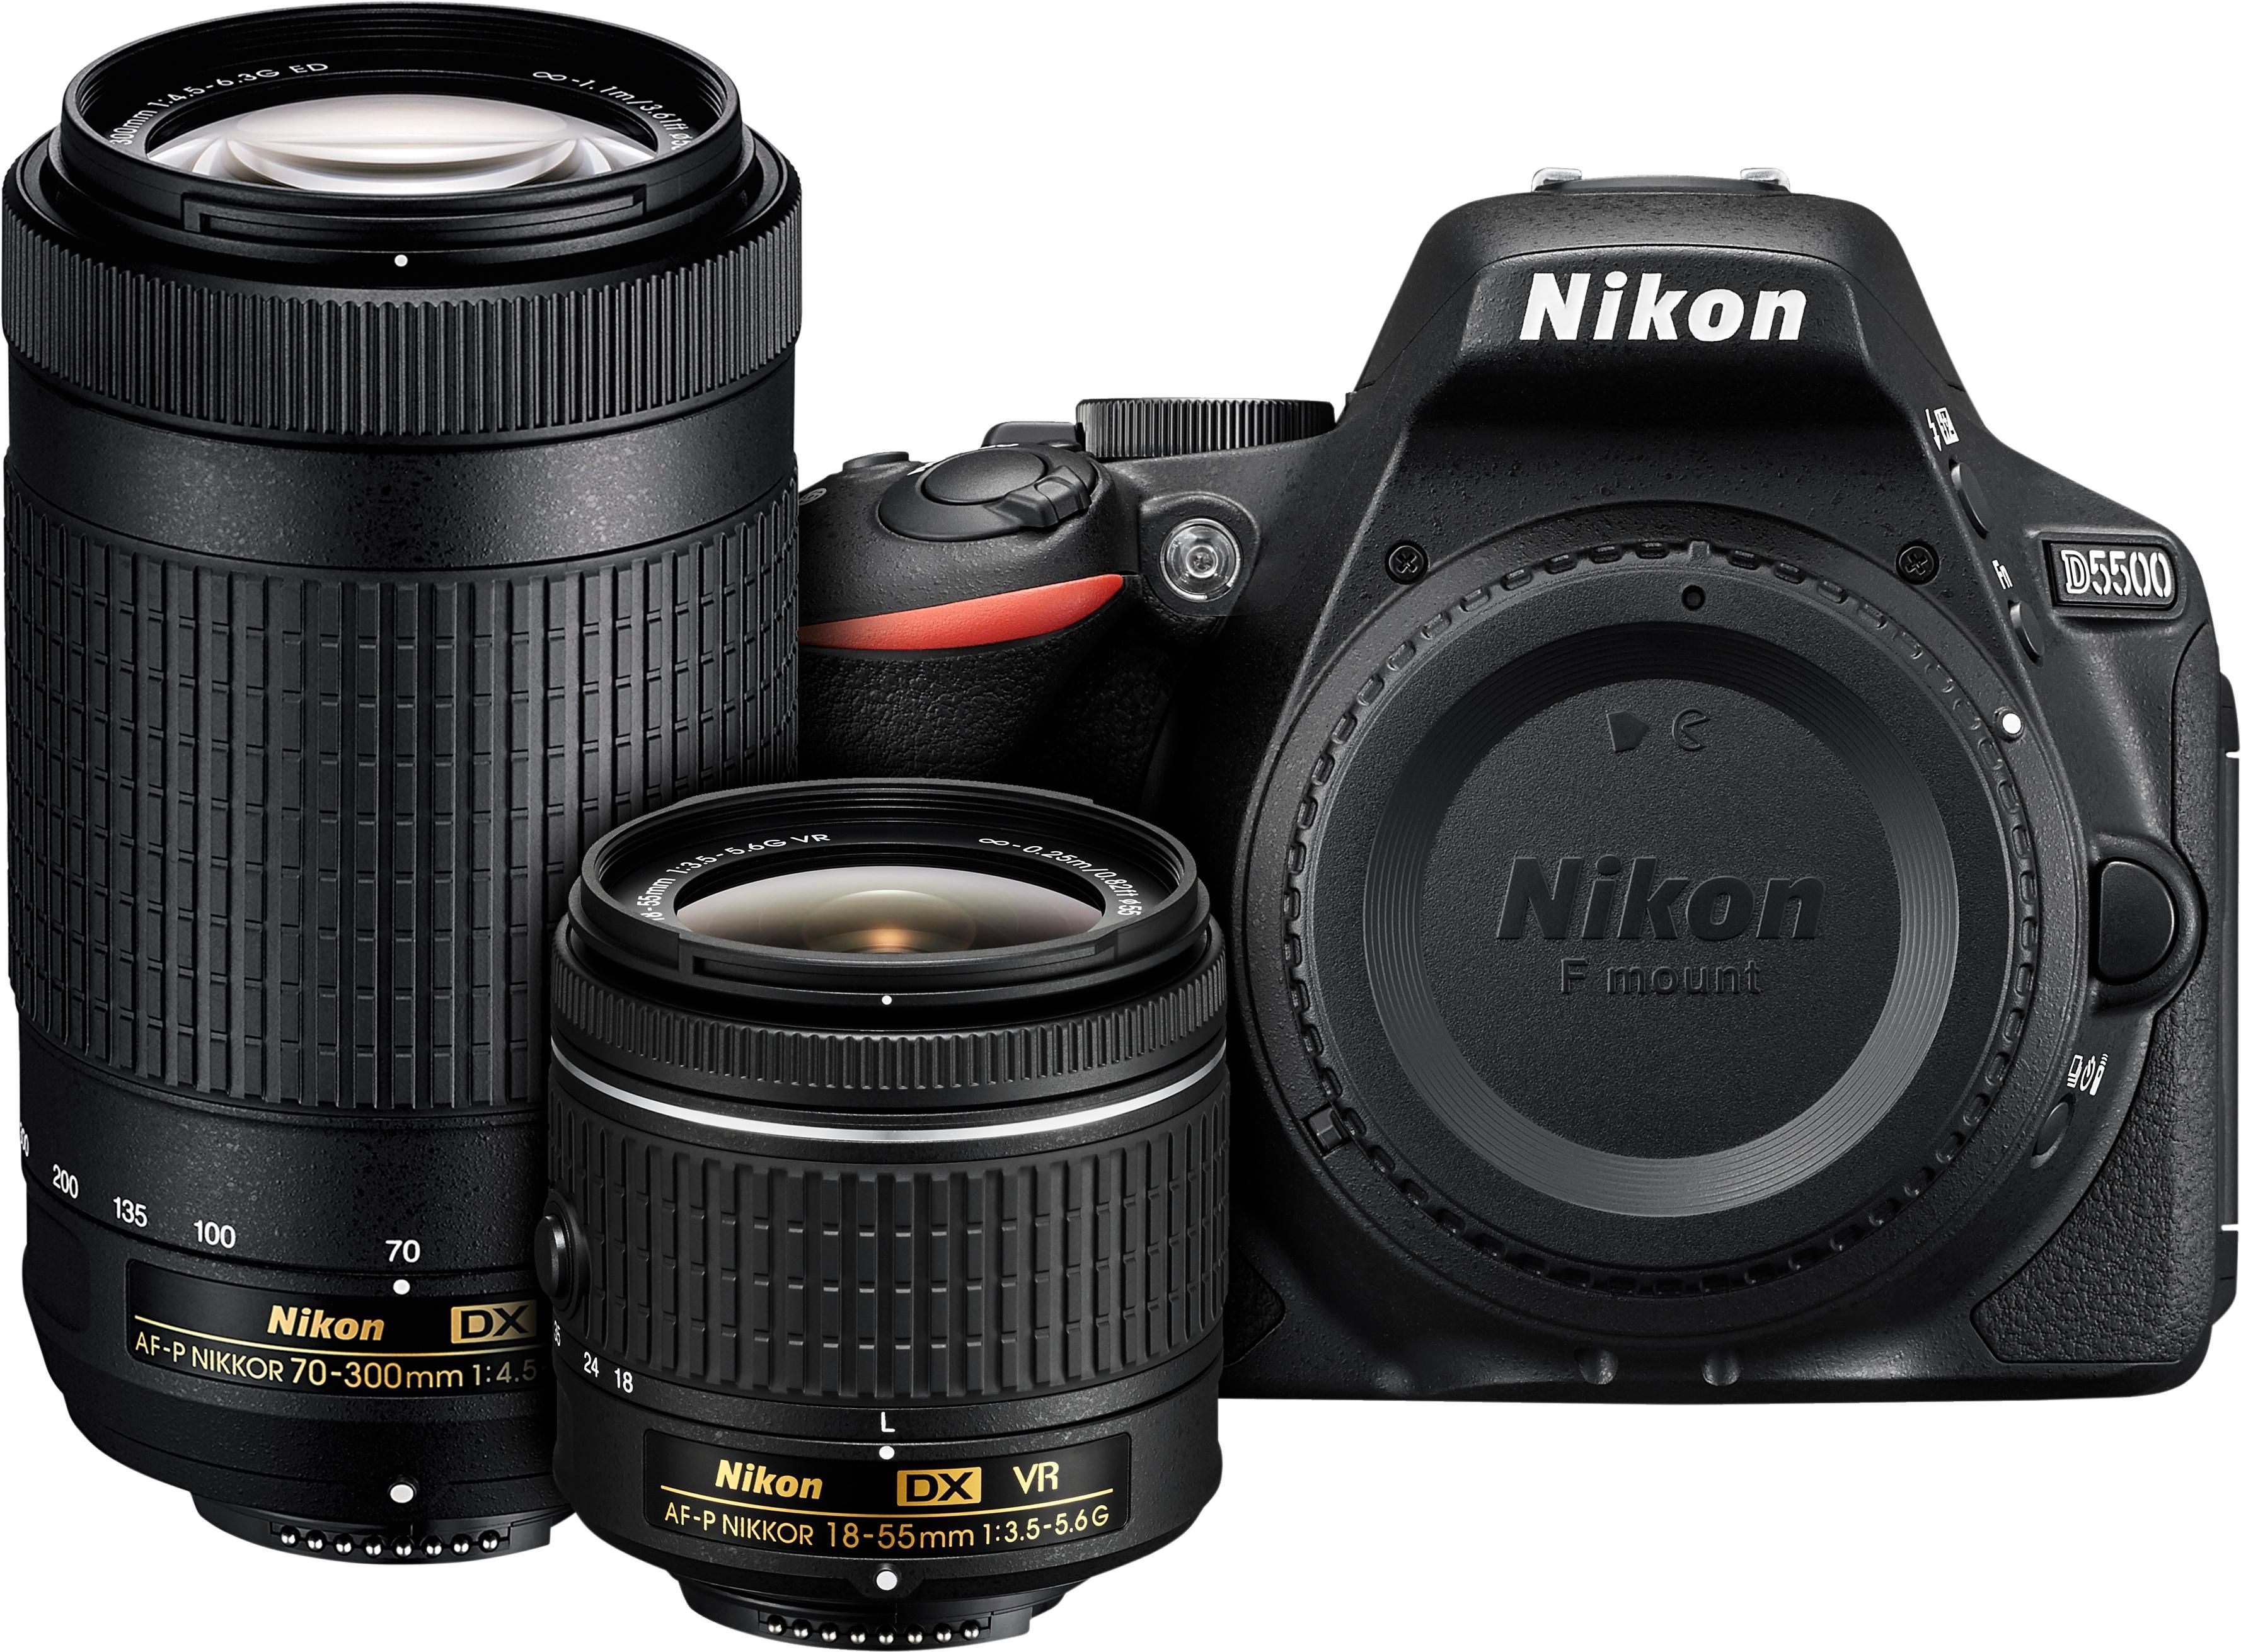 Nikon D5500 DSLR Camera with 18-55mm and 70-300mm Lenses Black 13530 - Best Buy | Best Buy U.S.